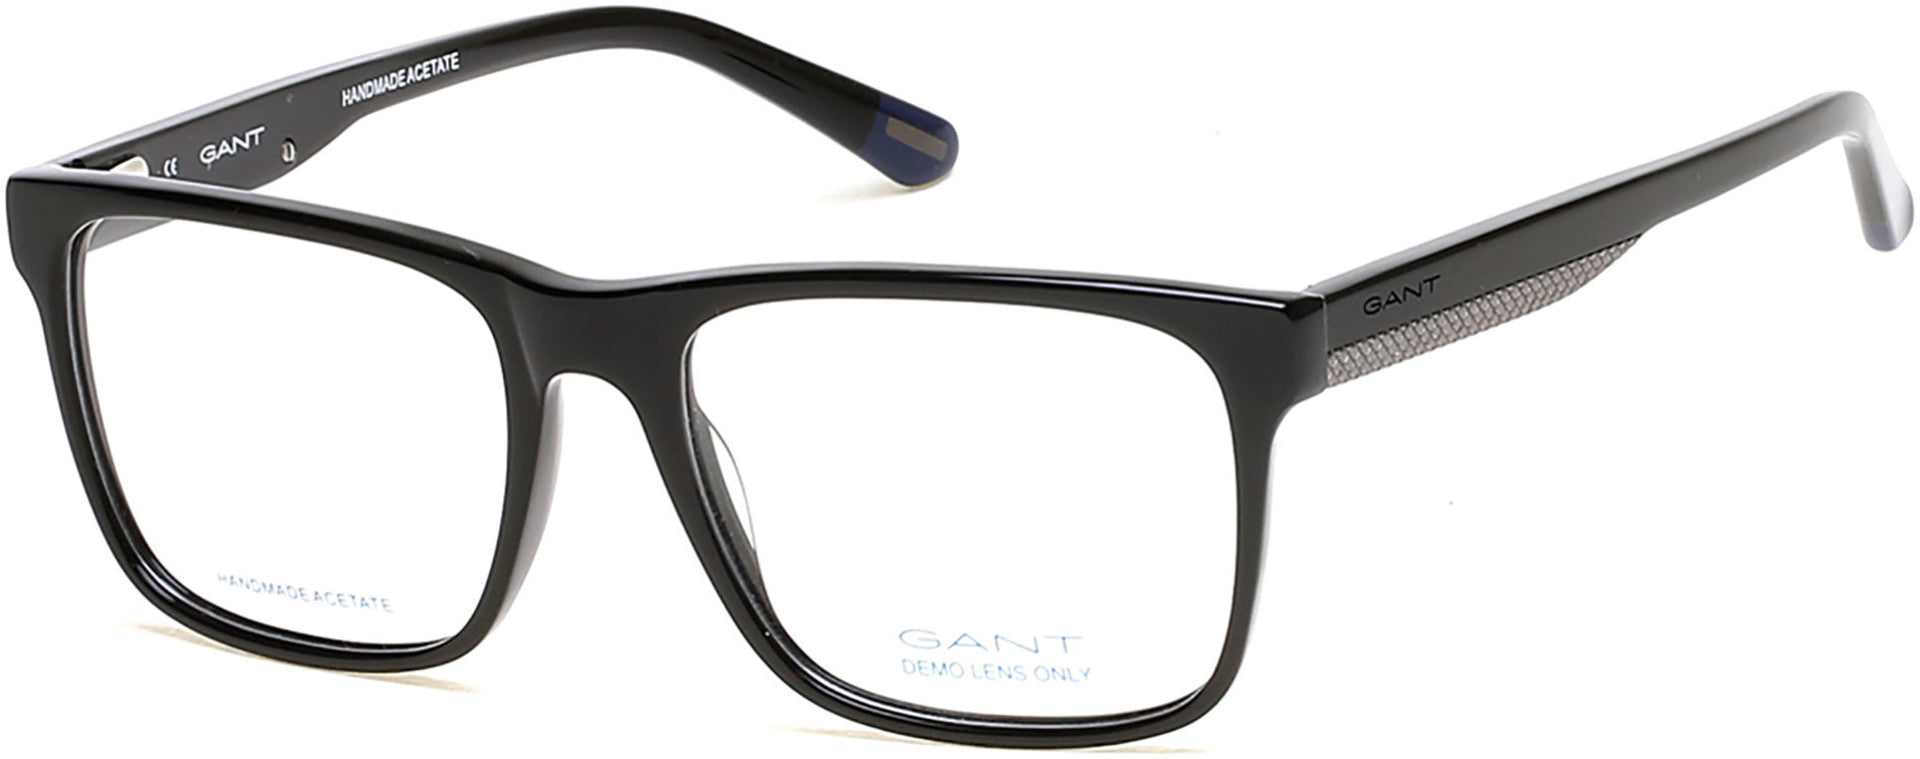 Gant GA3122 Geometric Eyeglasses 001-001 - Shiny Black